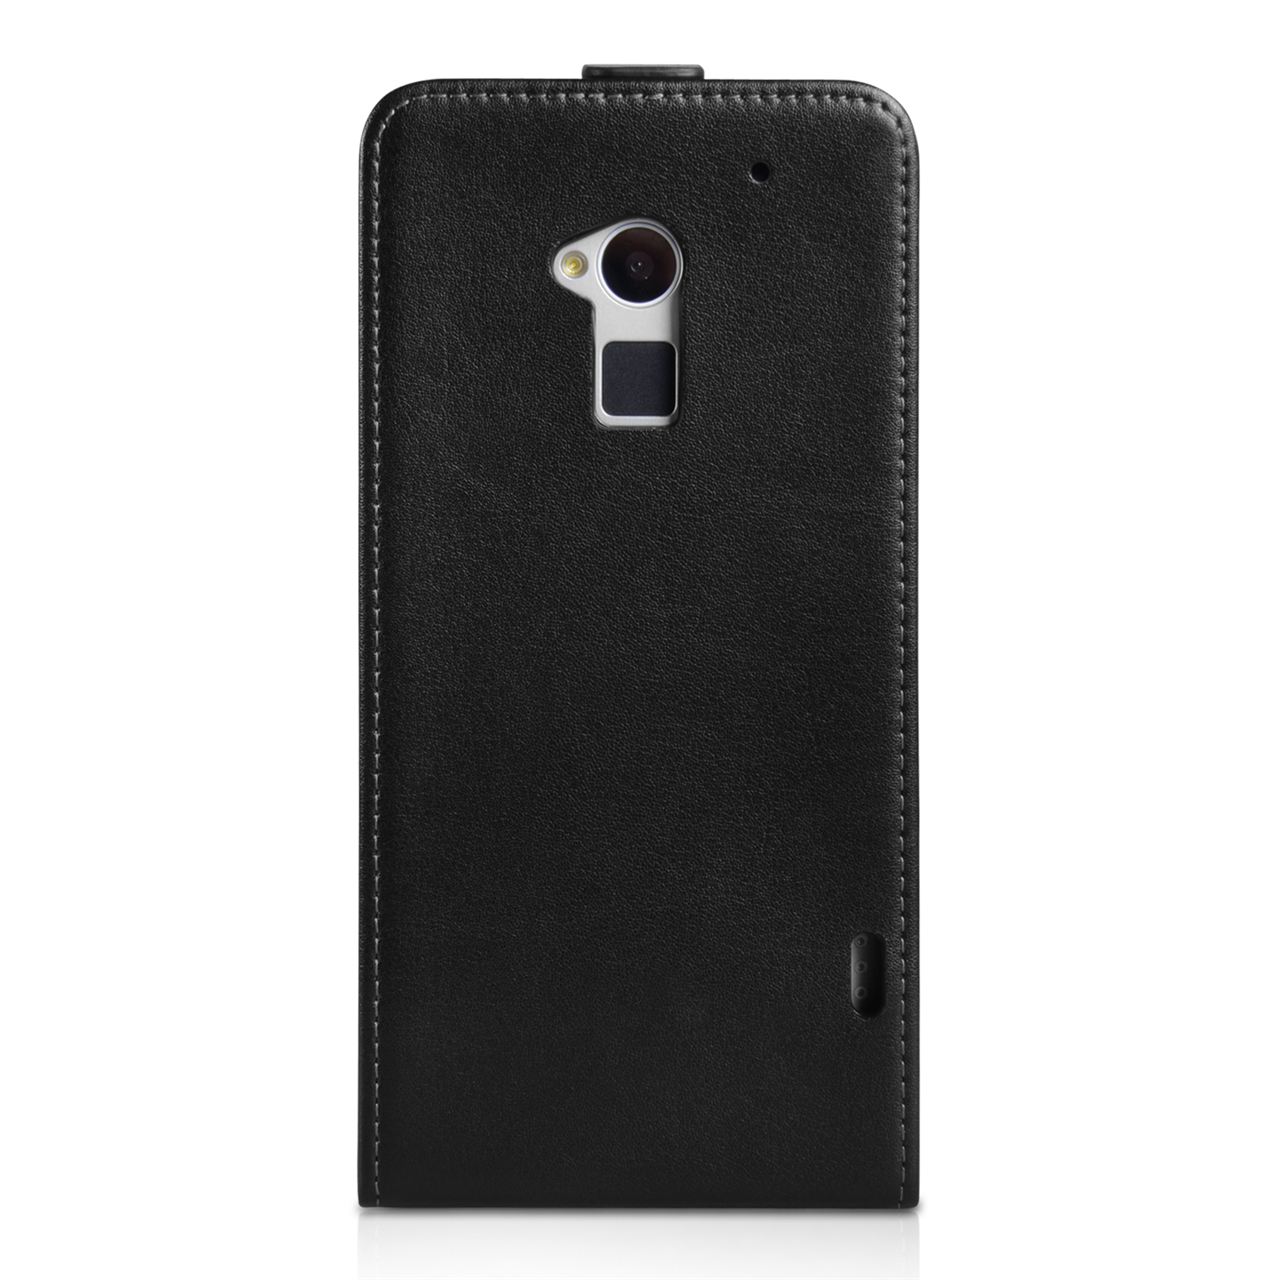 Caseflex HTC One Max Real Leather Flip Case - Black